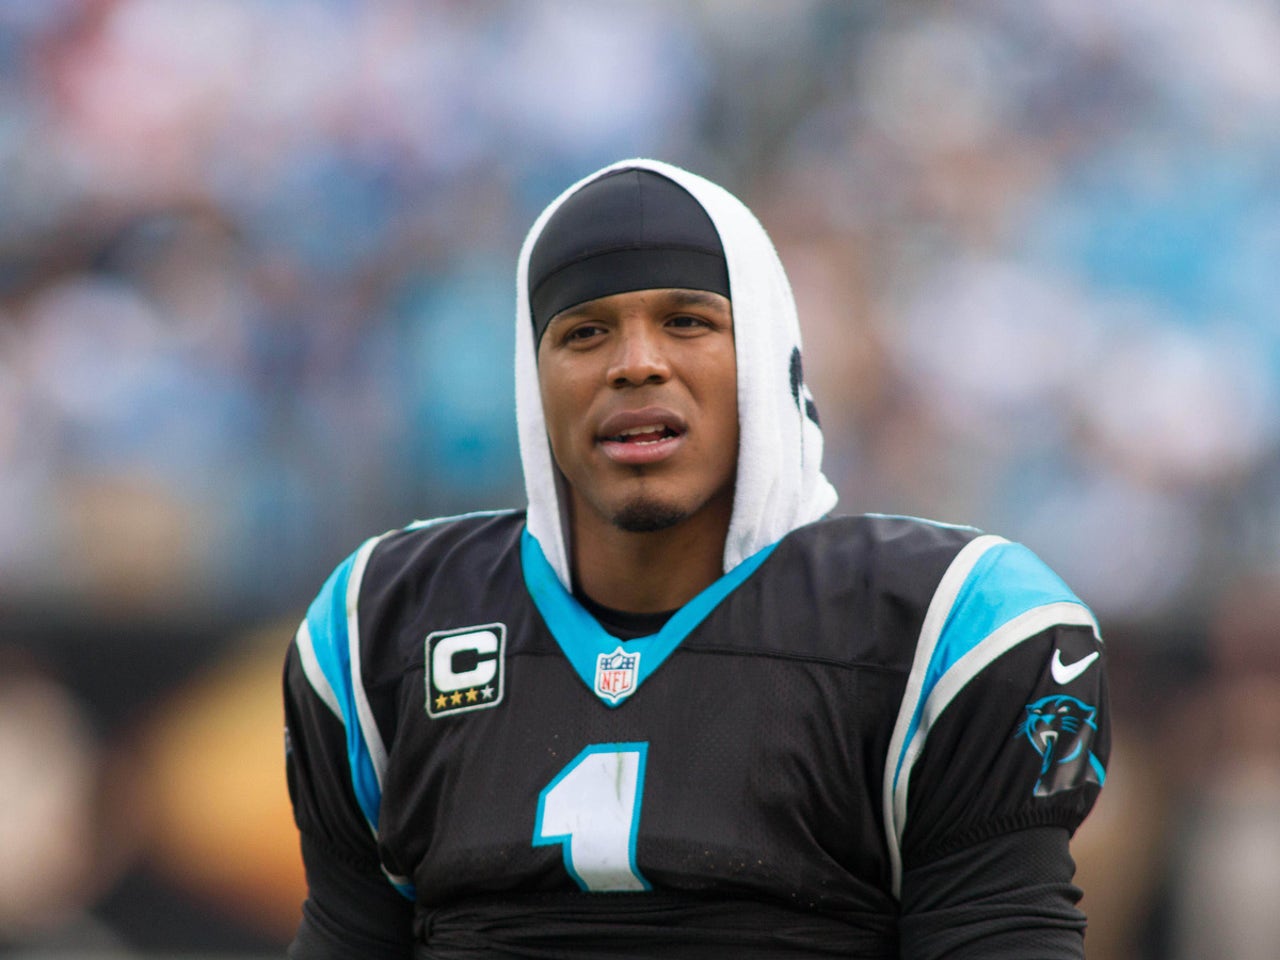 Cam Newton, Richard Dent among Atlanta's top 10 NFL stars